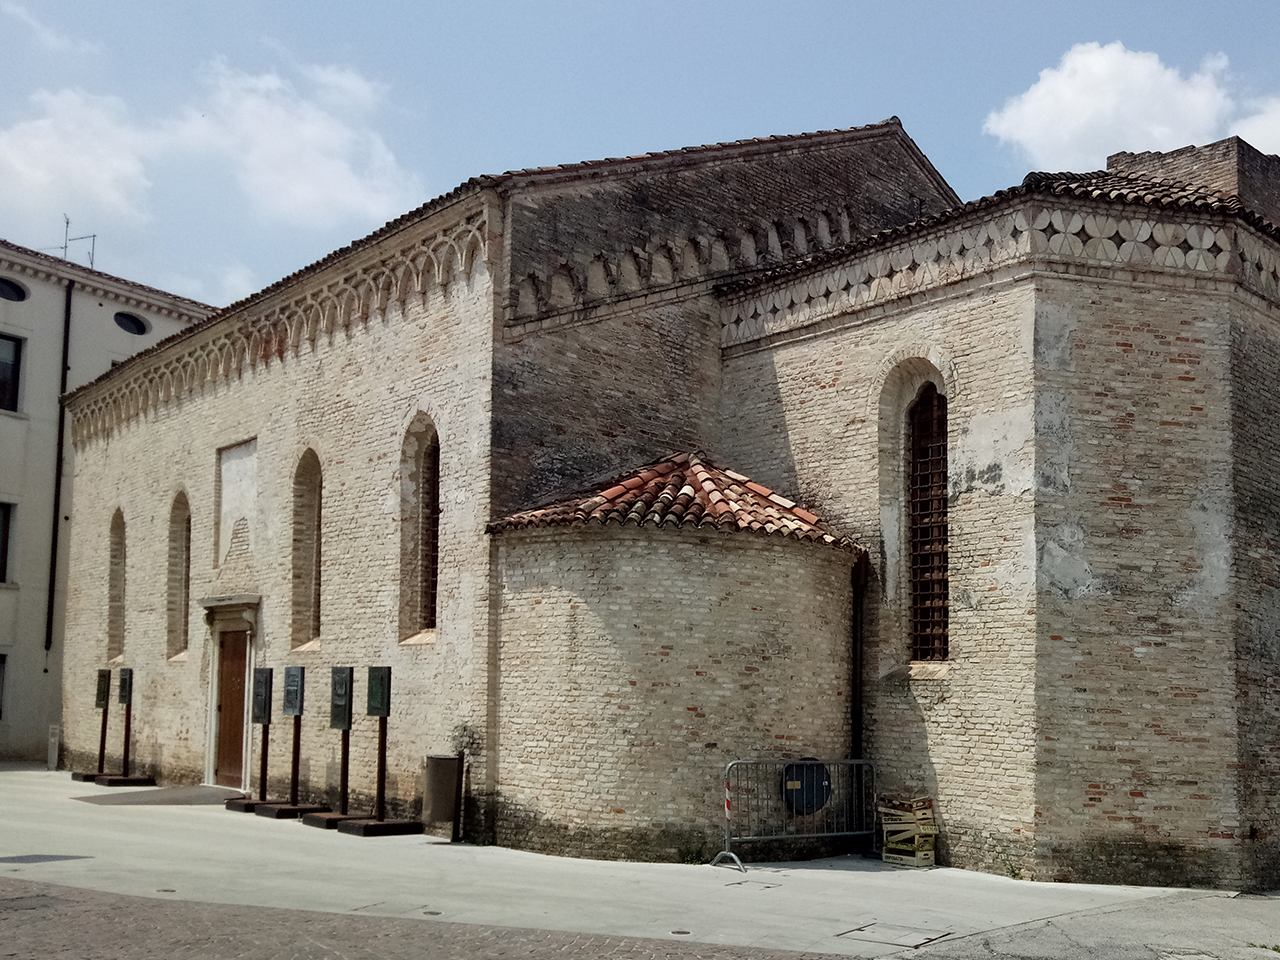 Ex convento di San Francesco e Chiesa (convento, francescano) - Pordenone (PN) 